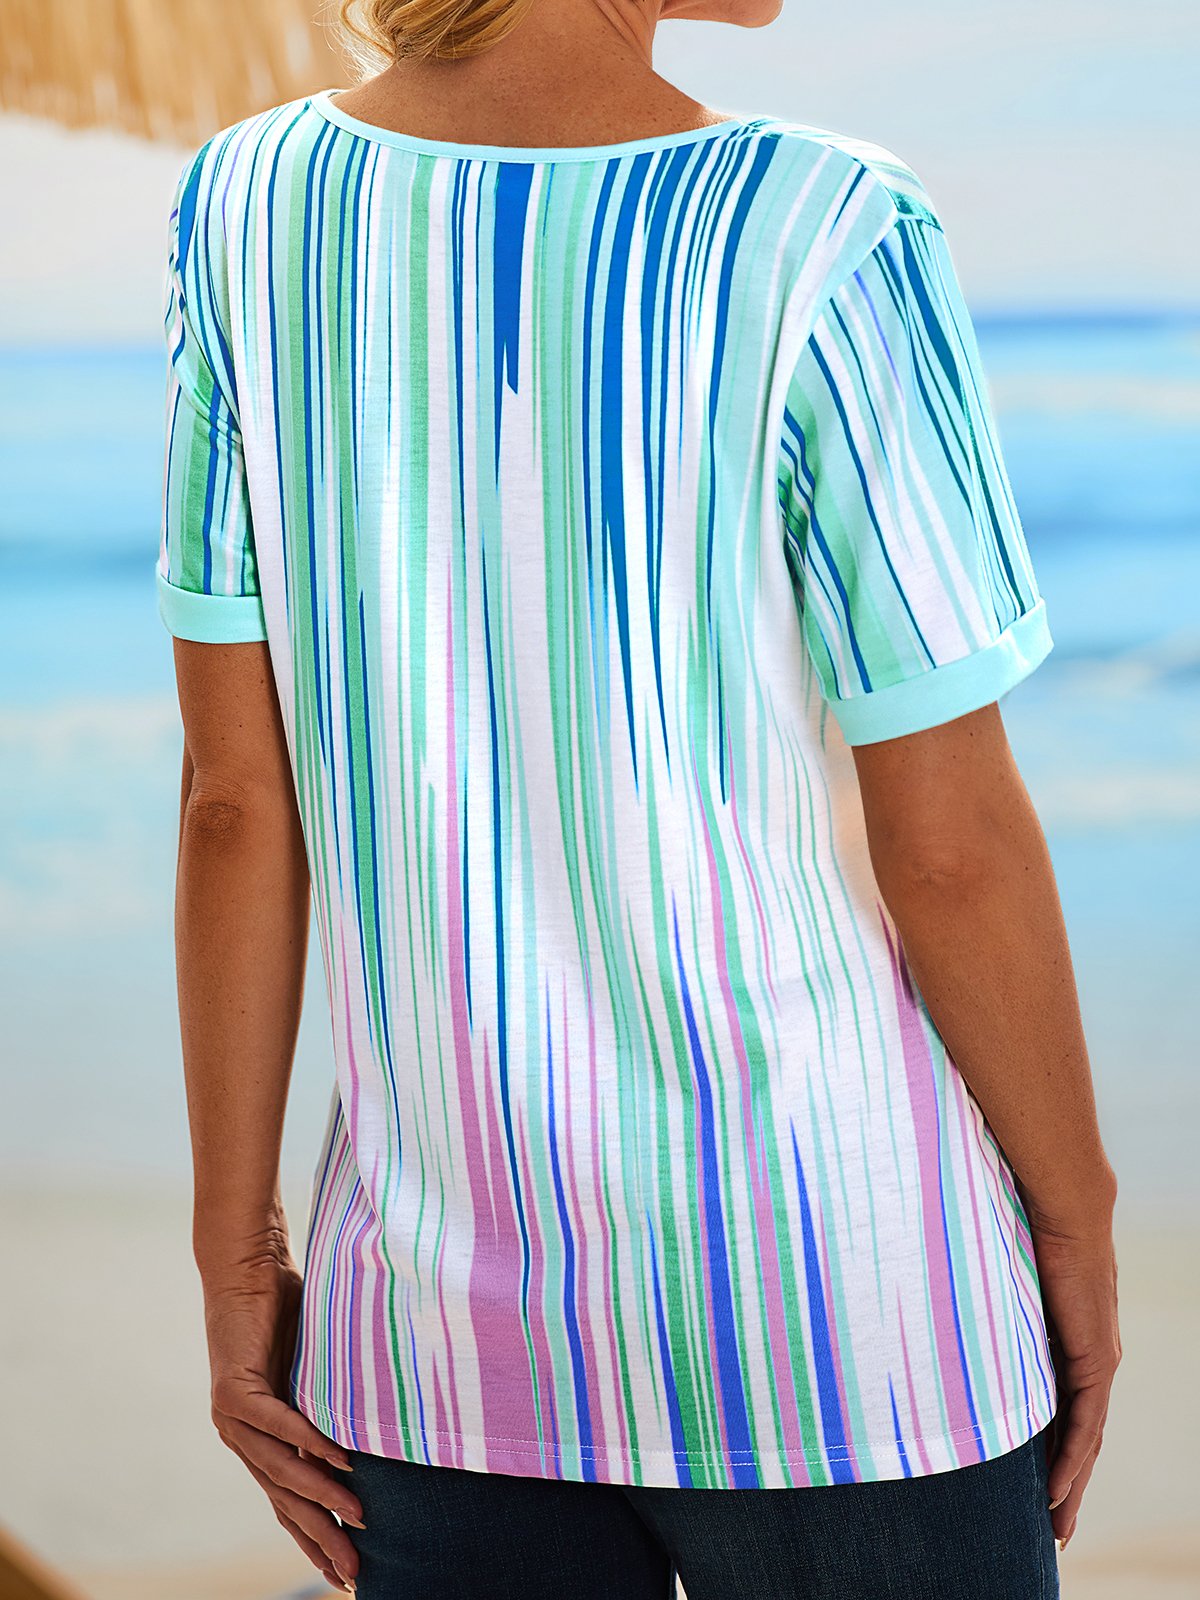 Locker Farbverlauf V-Ausschnitt Kurzarm Blusen & Shirts